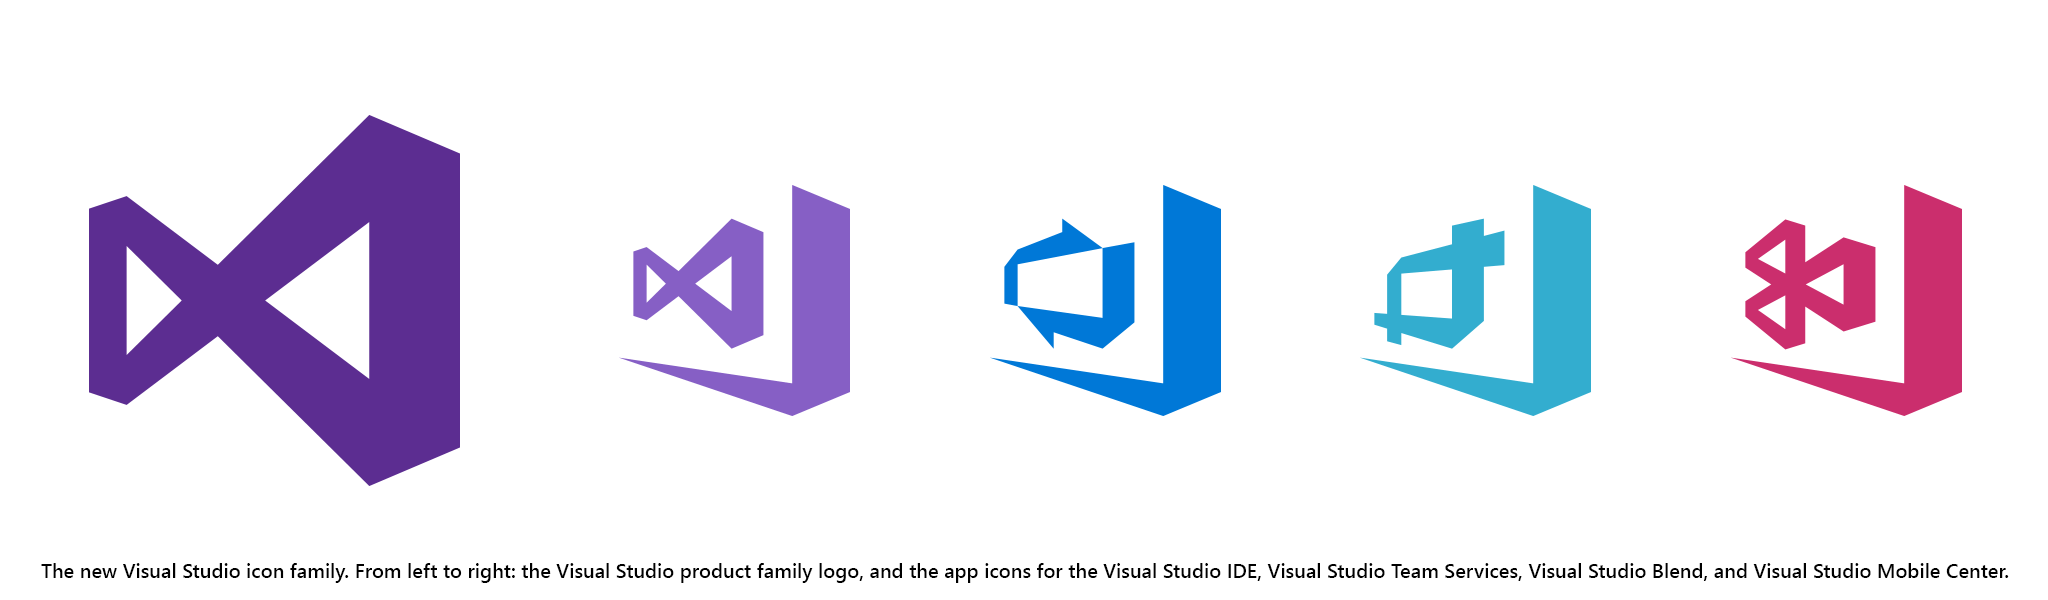 Visual Studio Logo - Iterations on infinity | The Visual Studio Blog